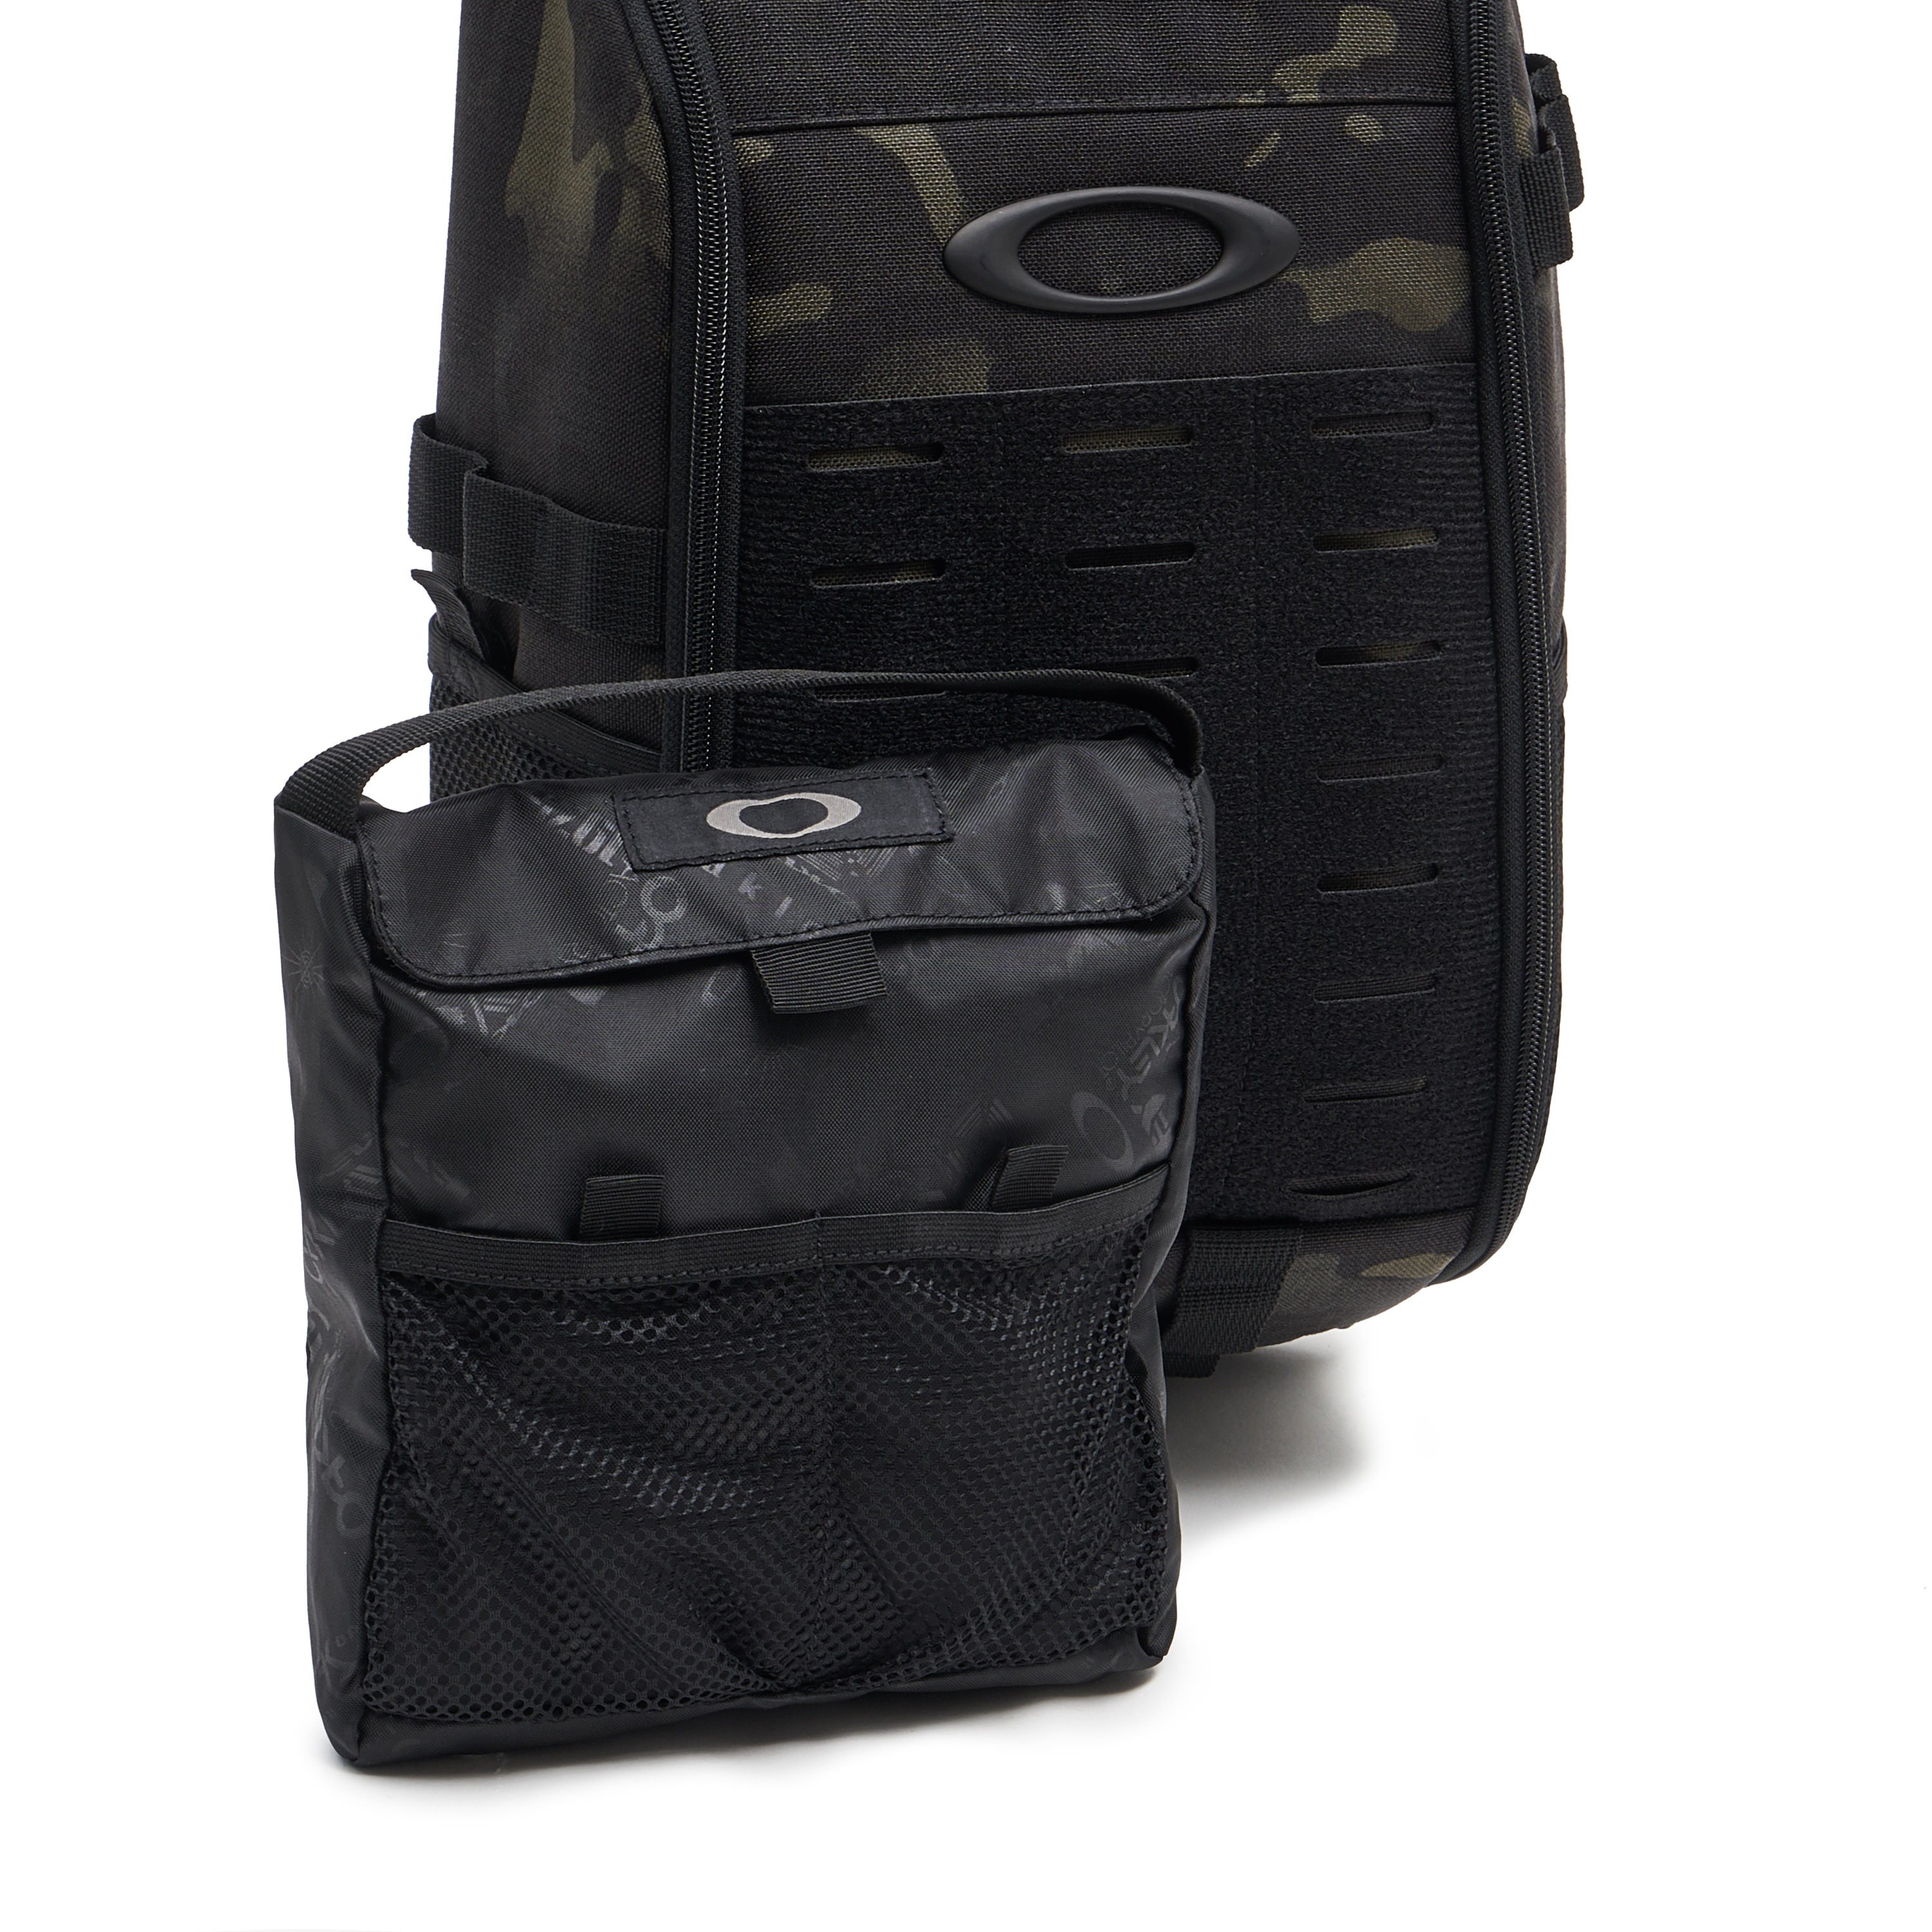 oakley sling backpacks